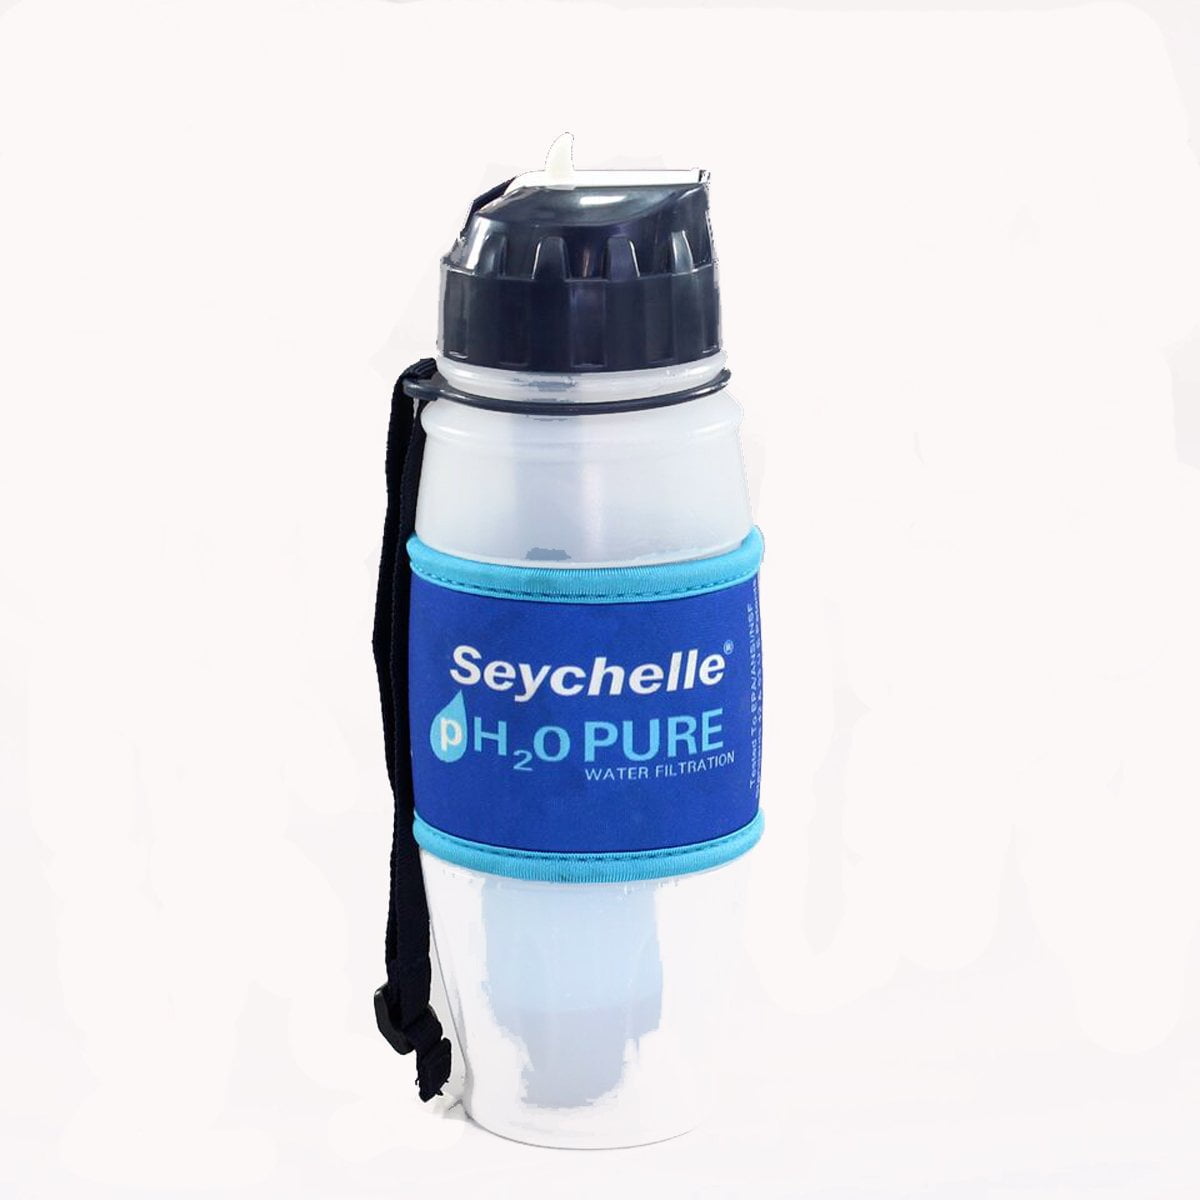 Seychelle pH20 28oz Pure Water Filter Bottle